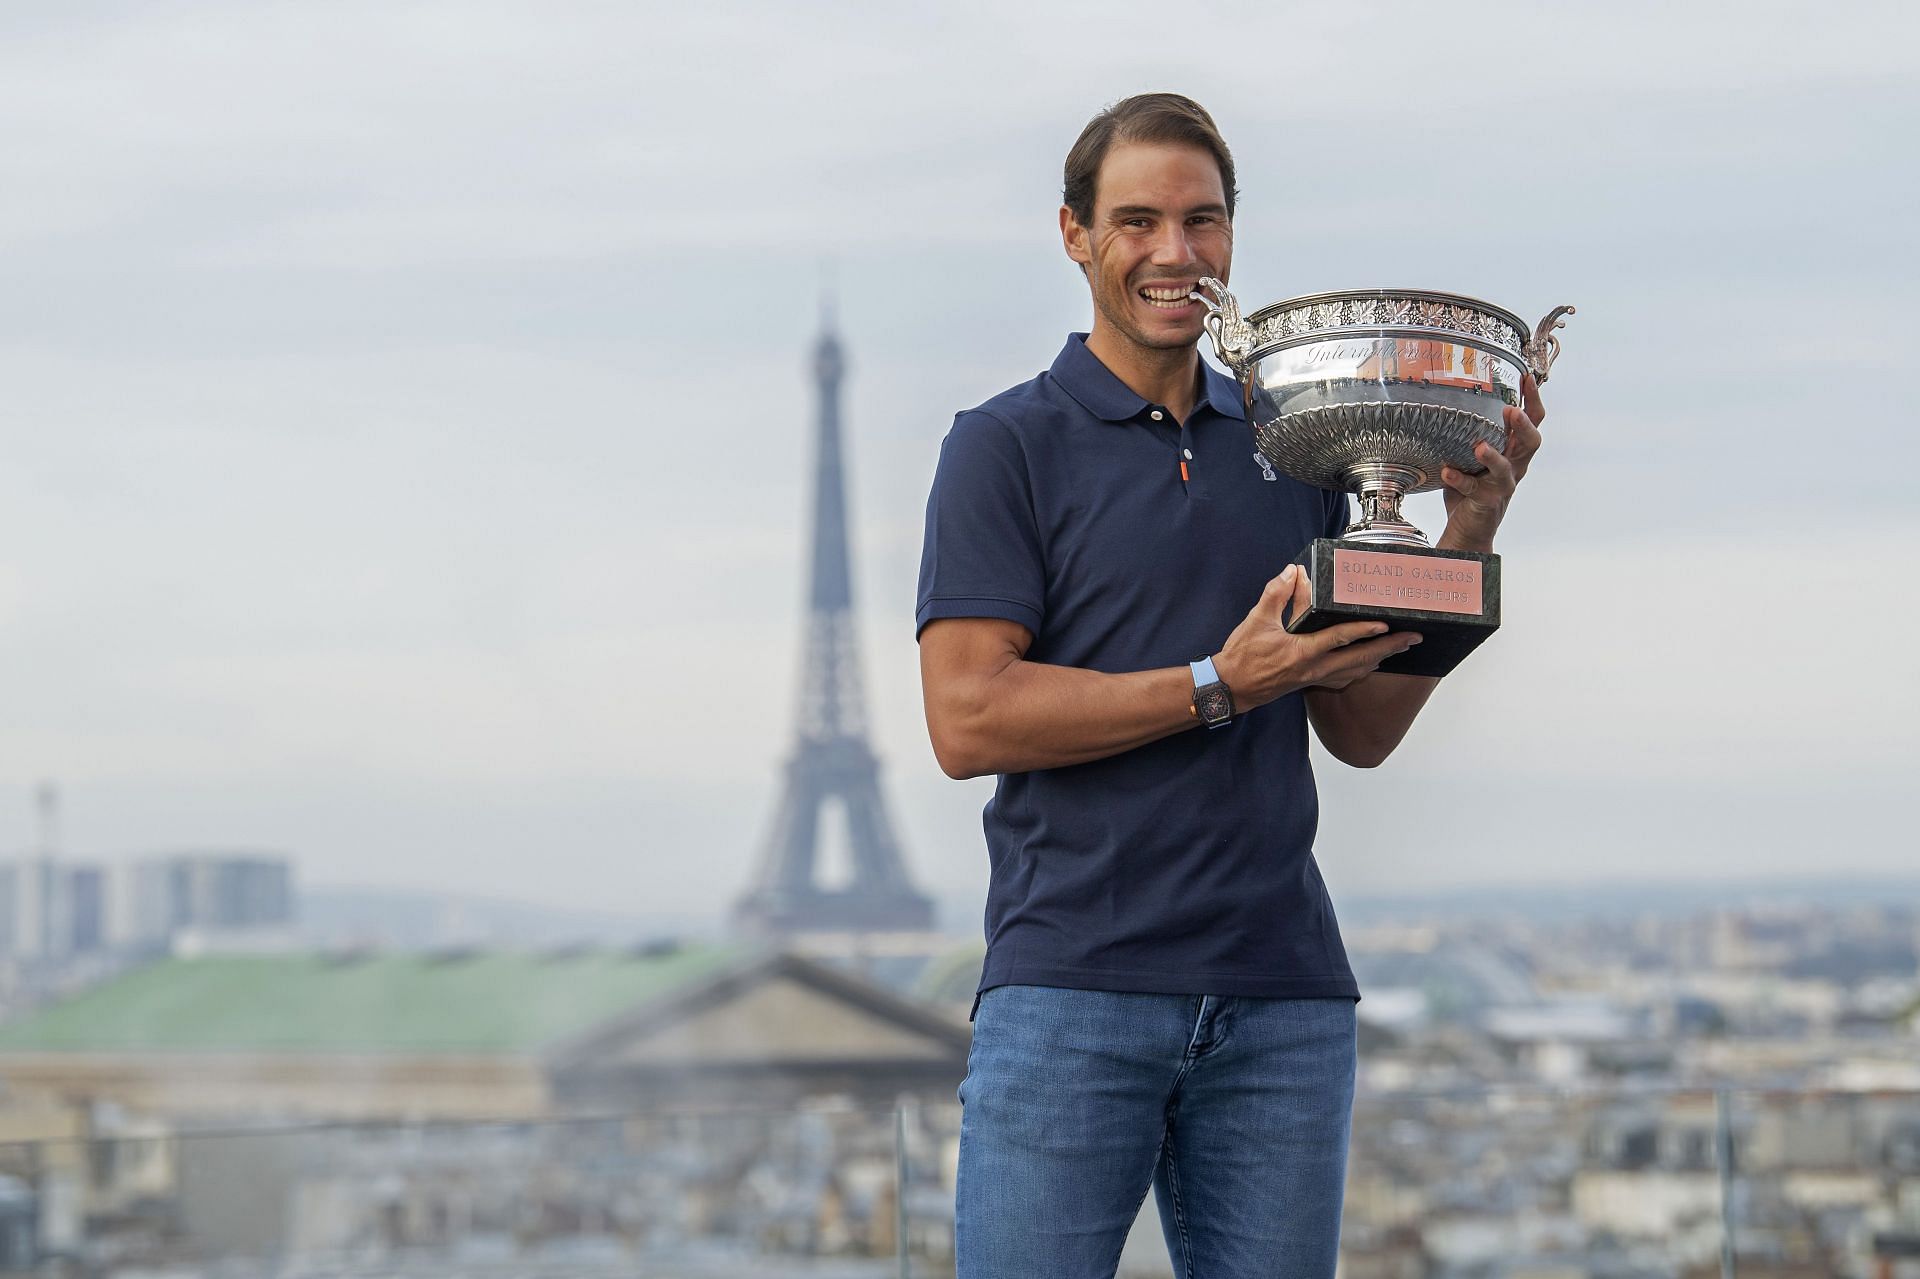 Rafael Nadal will chase more history at Roland Garros this year.